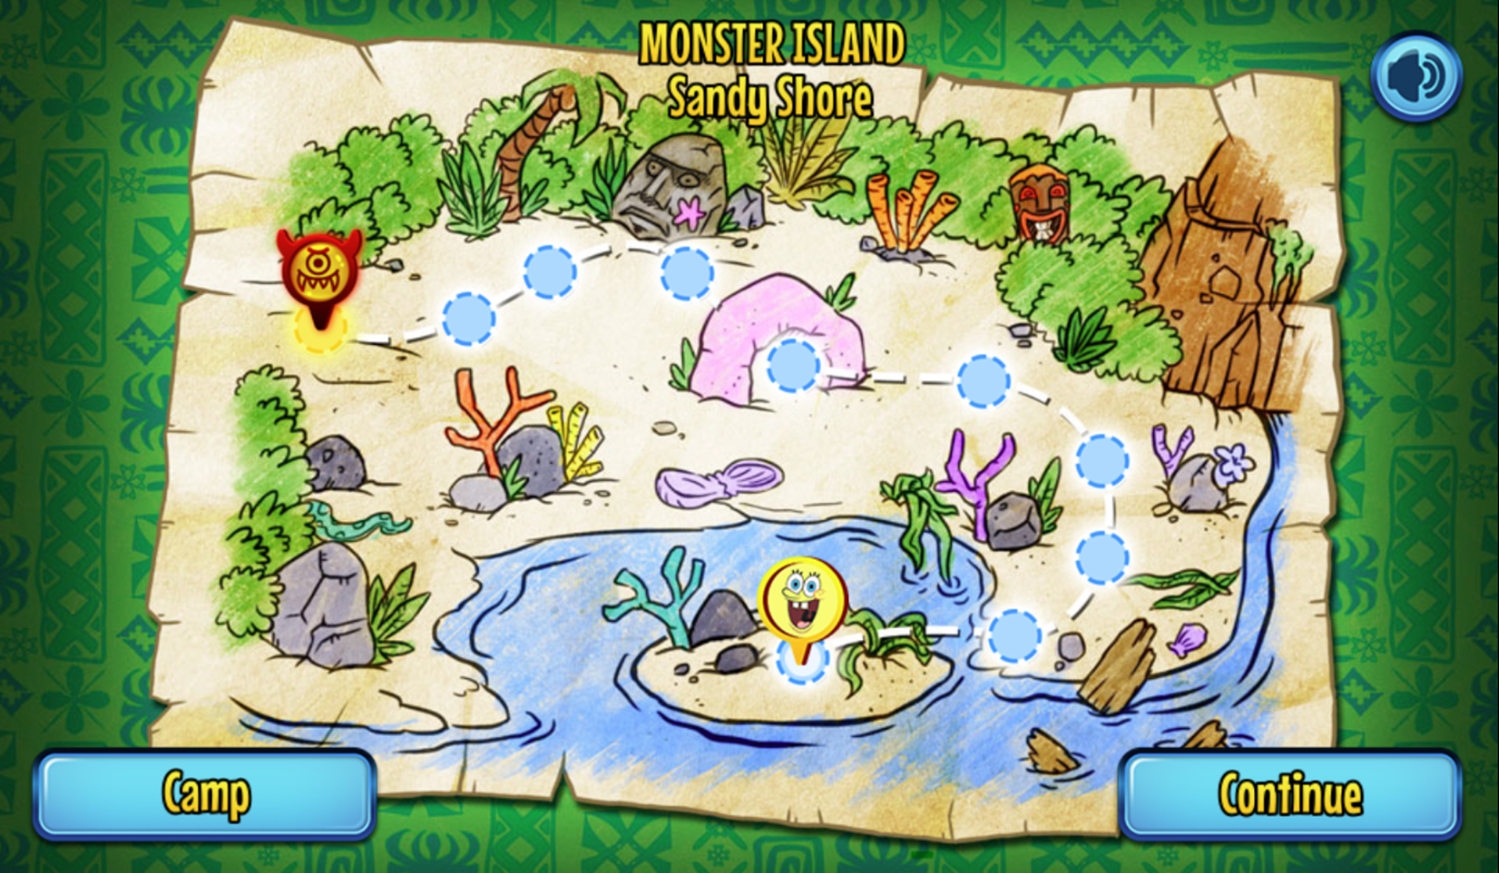 SpongeBob SquarePants Monster Island Adventure Game Sandy Shore Map Screen Screen Screenshot.